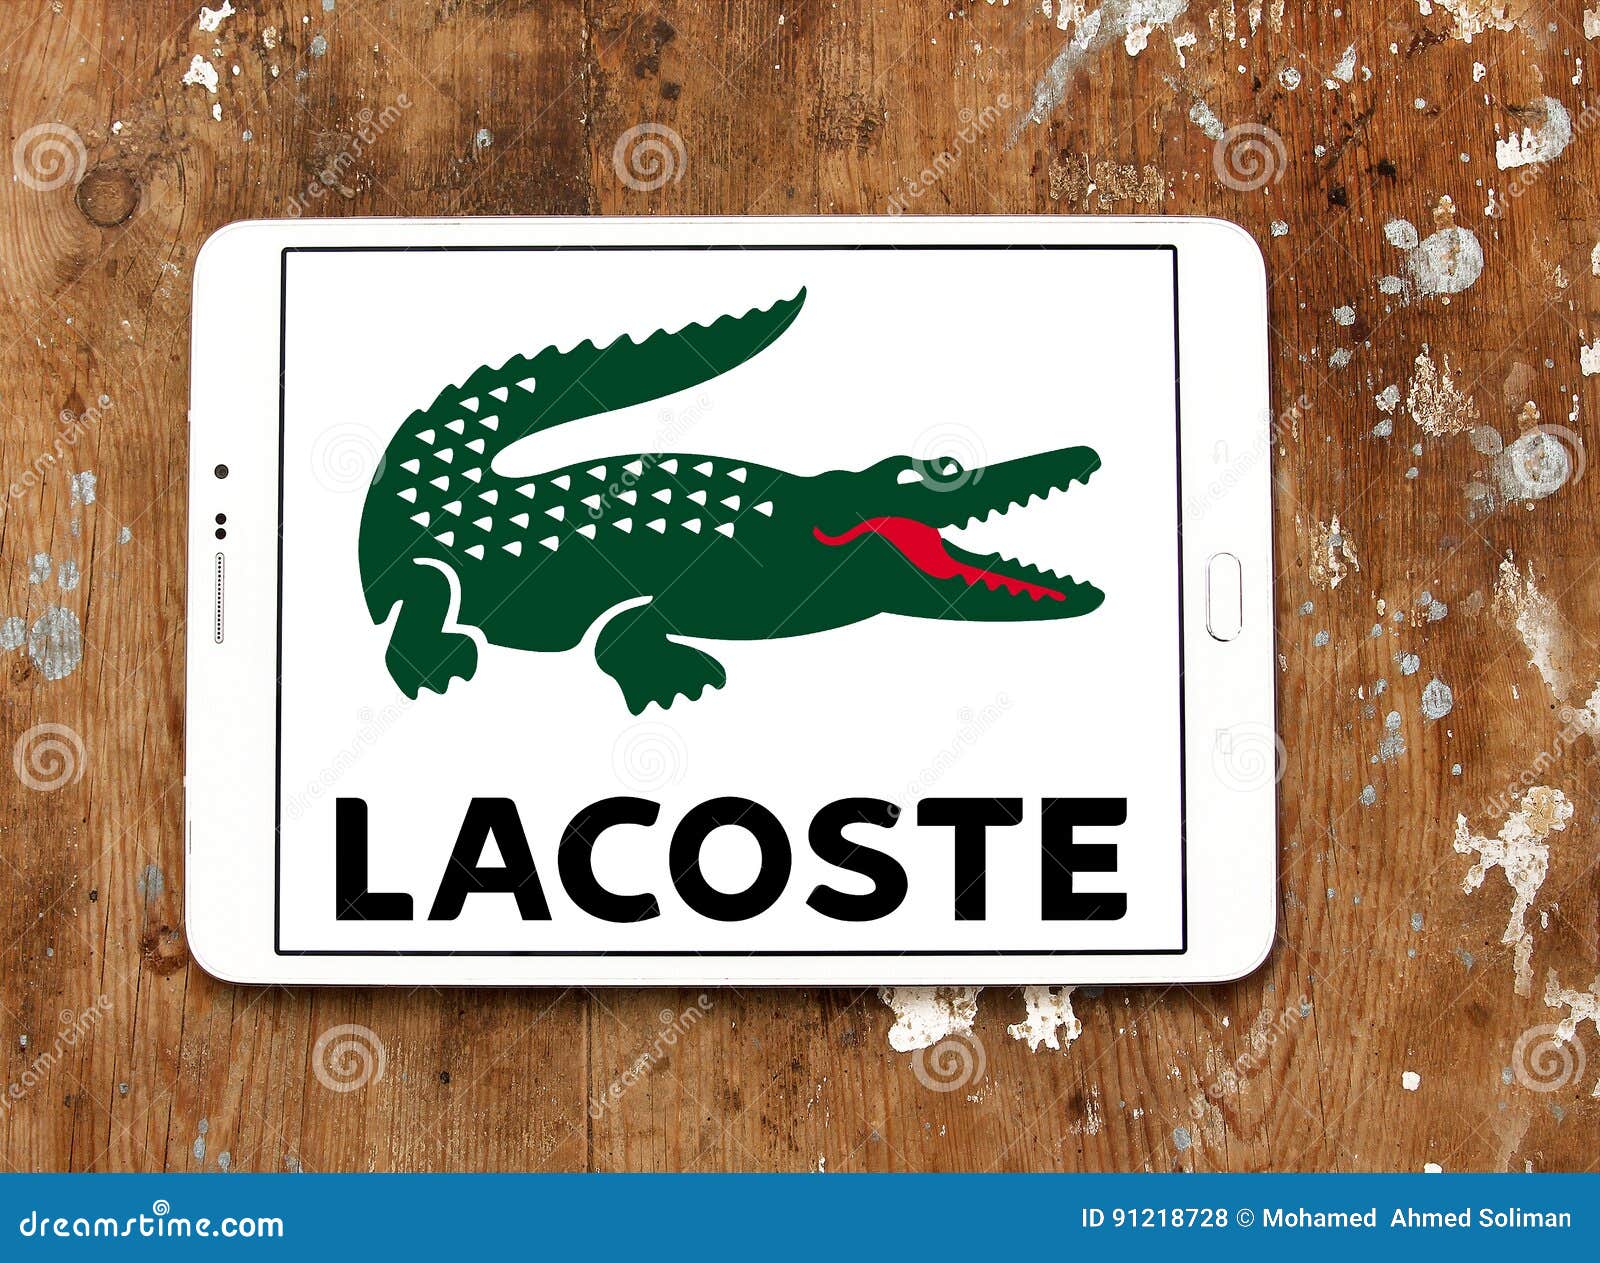 overholdelse Amorous Anholdelse Lacoste logo editorial stock photo. Image of logos, business - 91218728